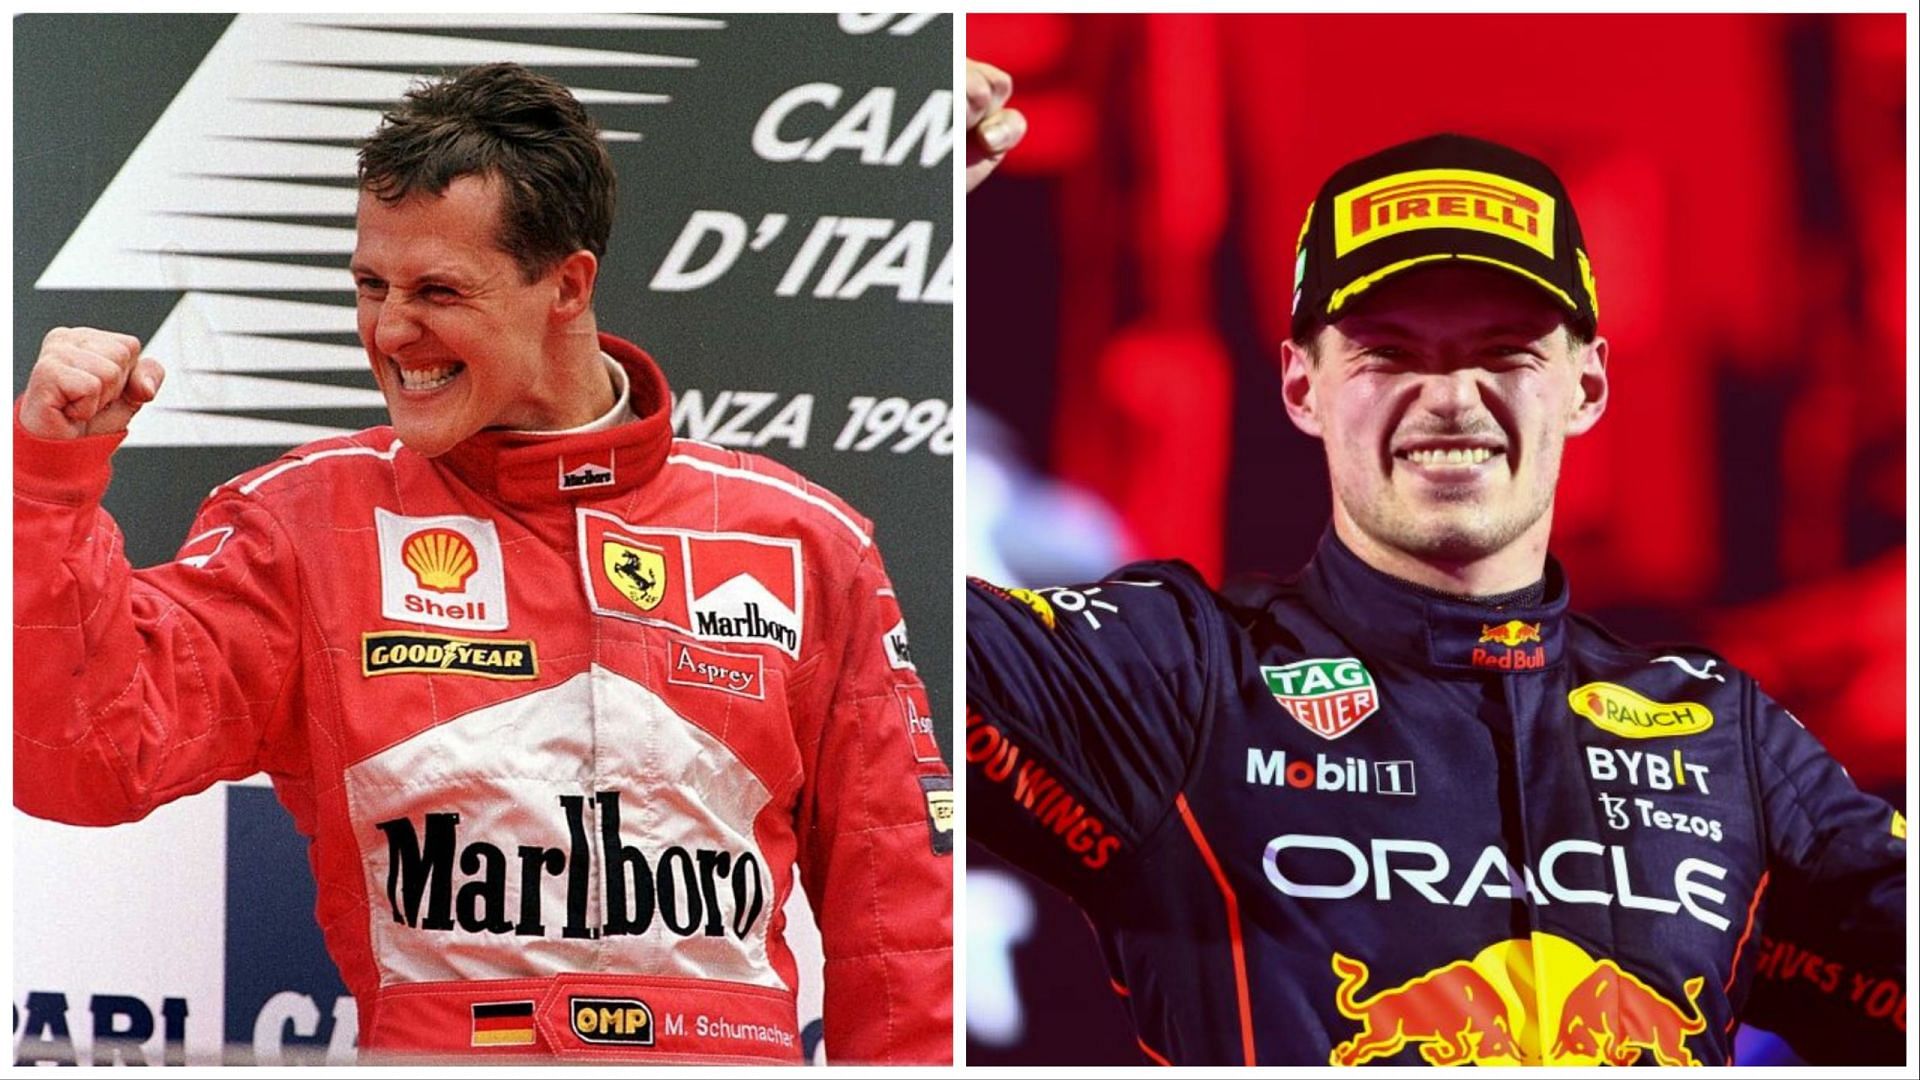 Jean Todt Compares Michael Schumacher to Max Verstappen